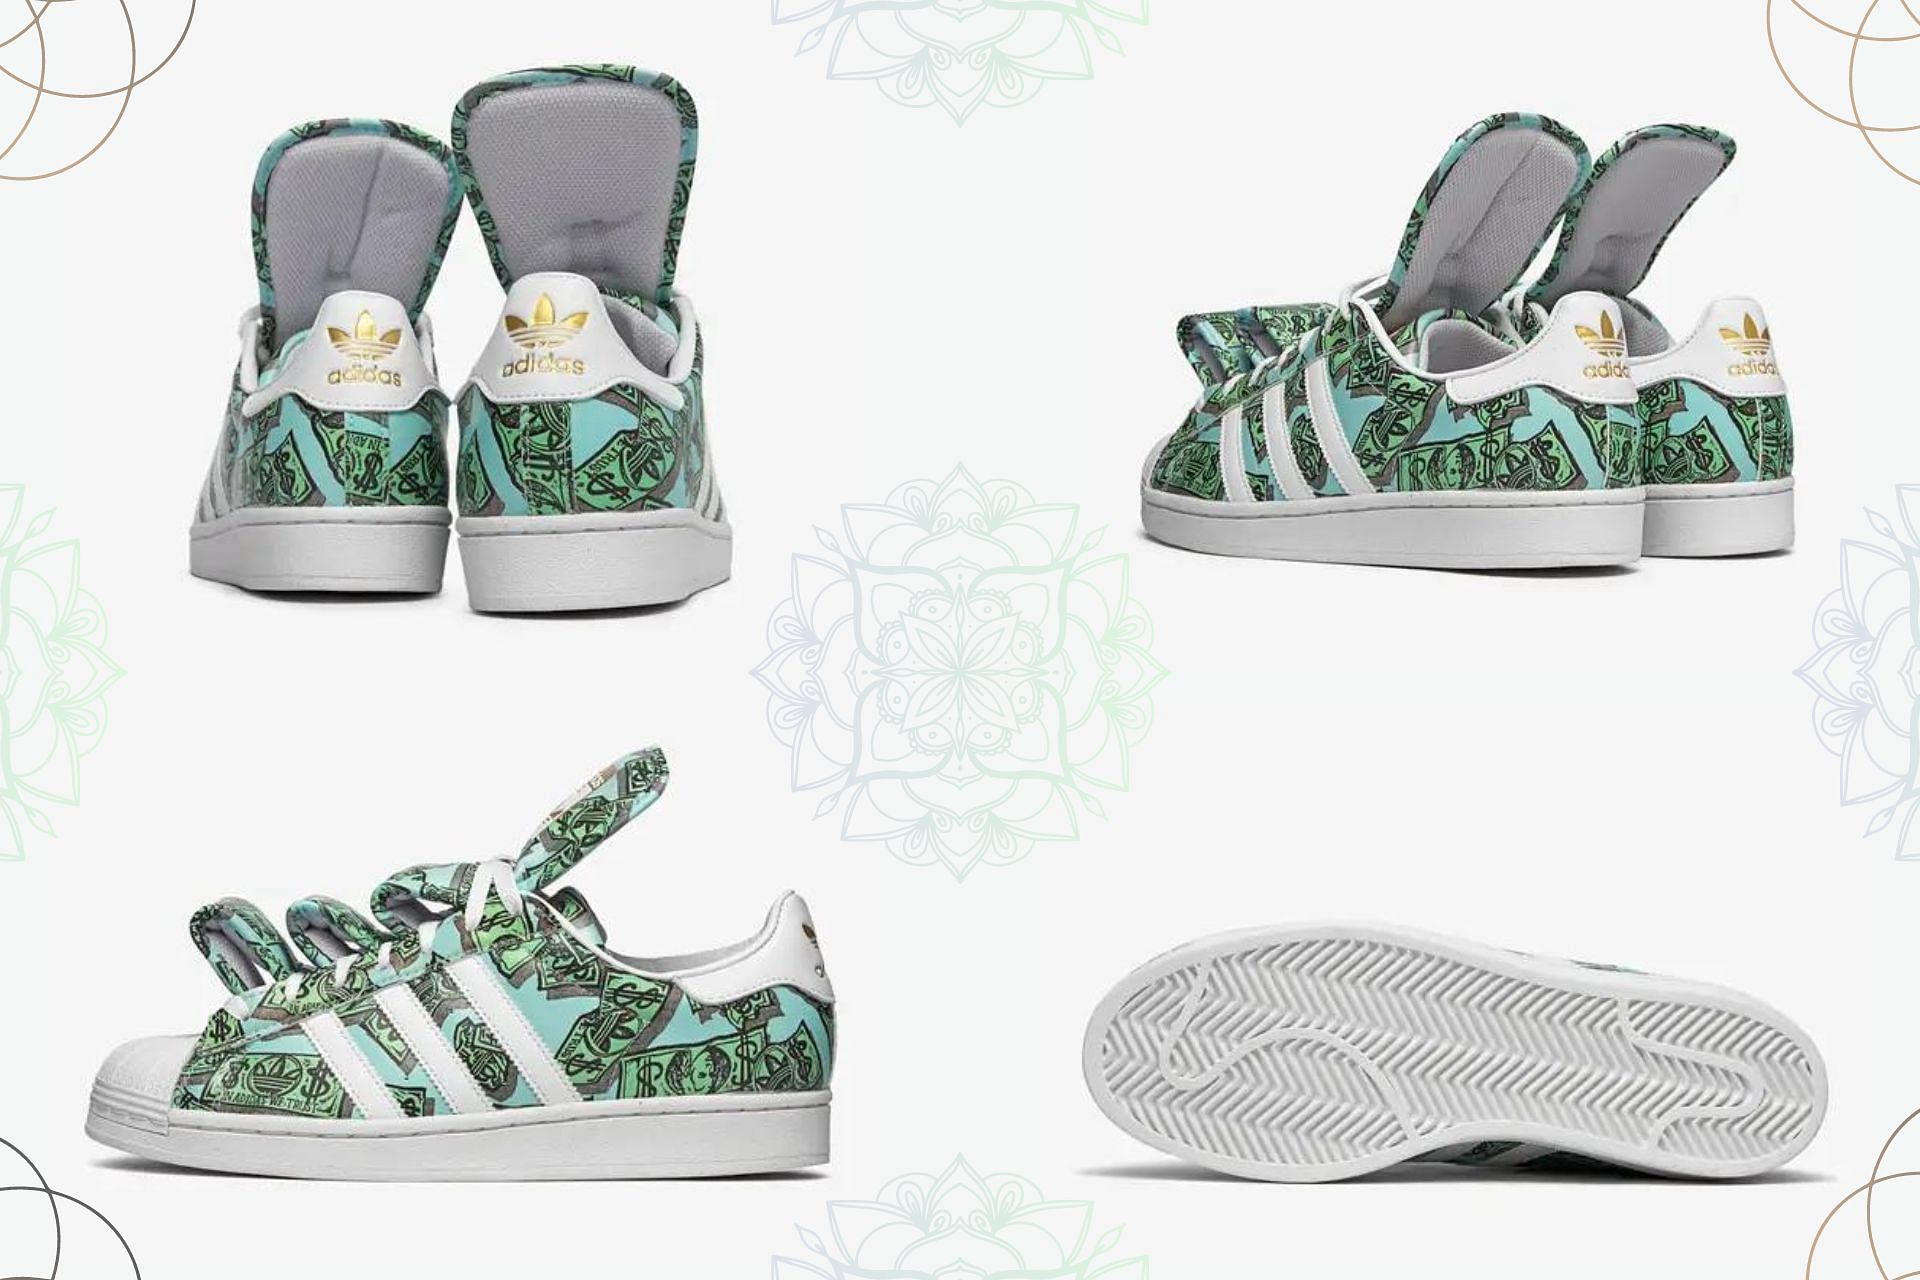 The upcoming Adidas Originals x Jeremy Scott Superstar &quot;Money&quot; sneakers come inspired by the dollar bills (Image via Sportskeeda)